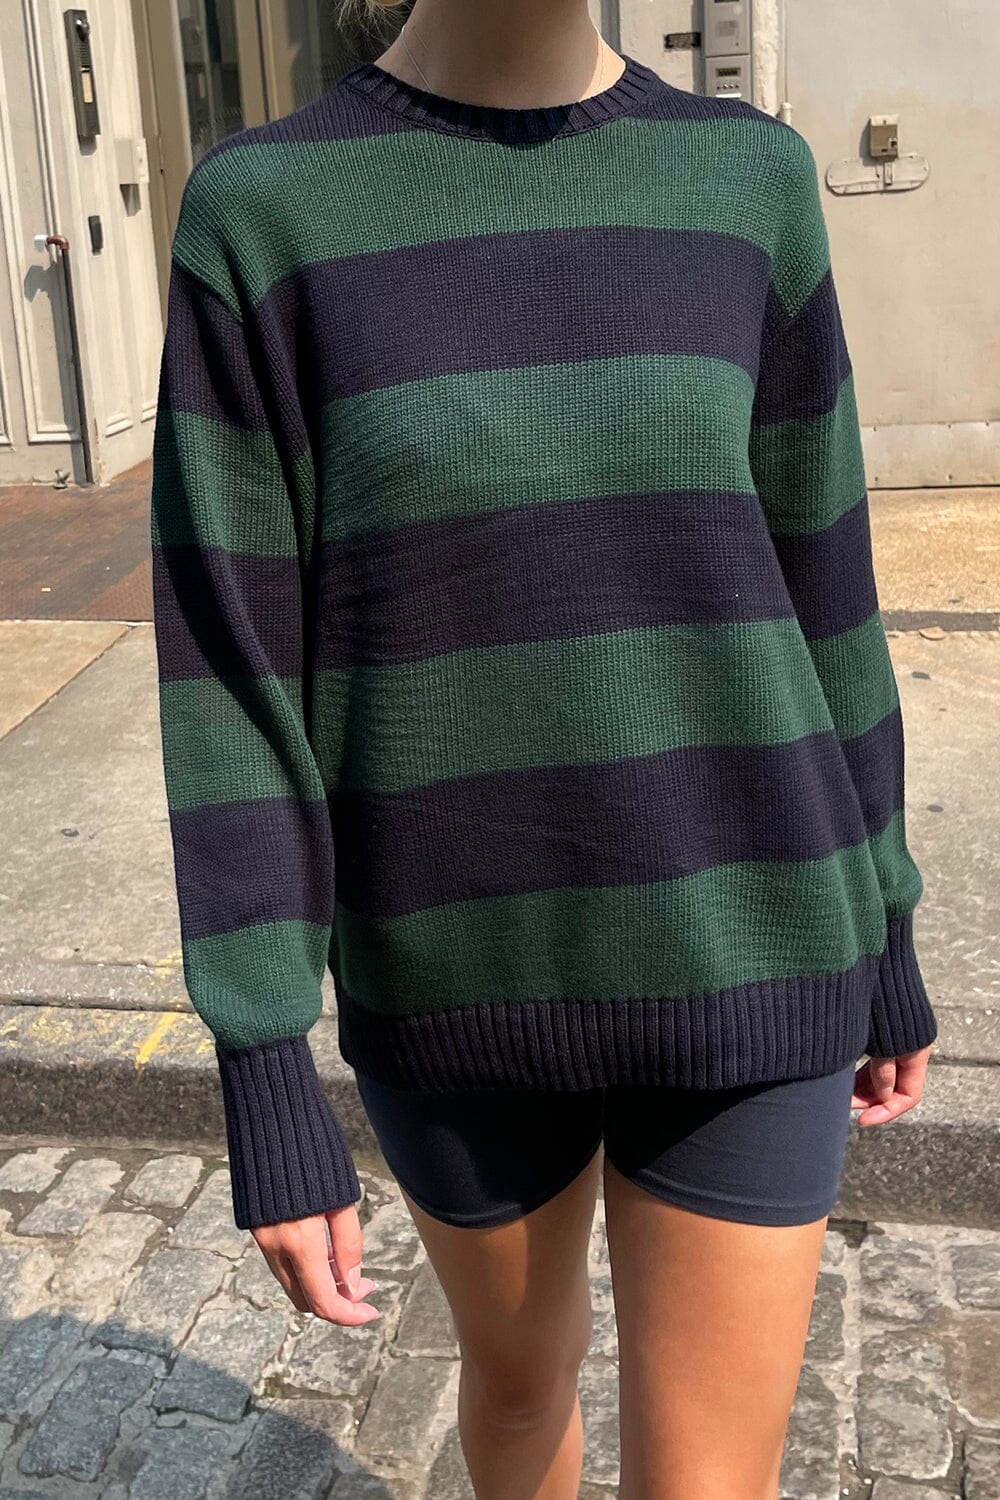 Oversized striped sweater - Black Light Brown